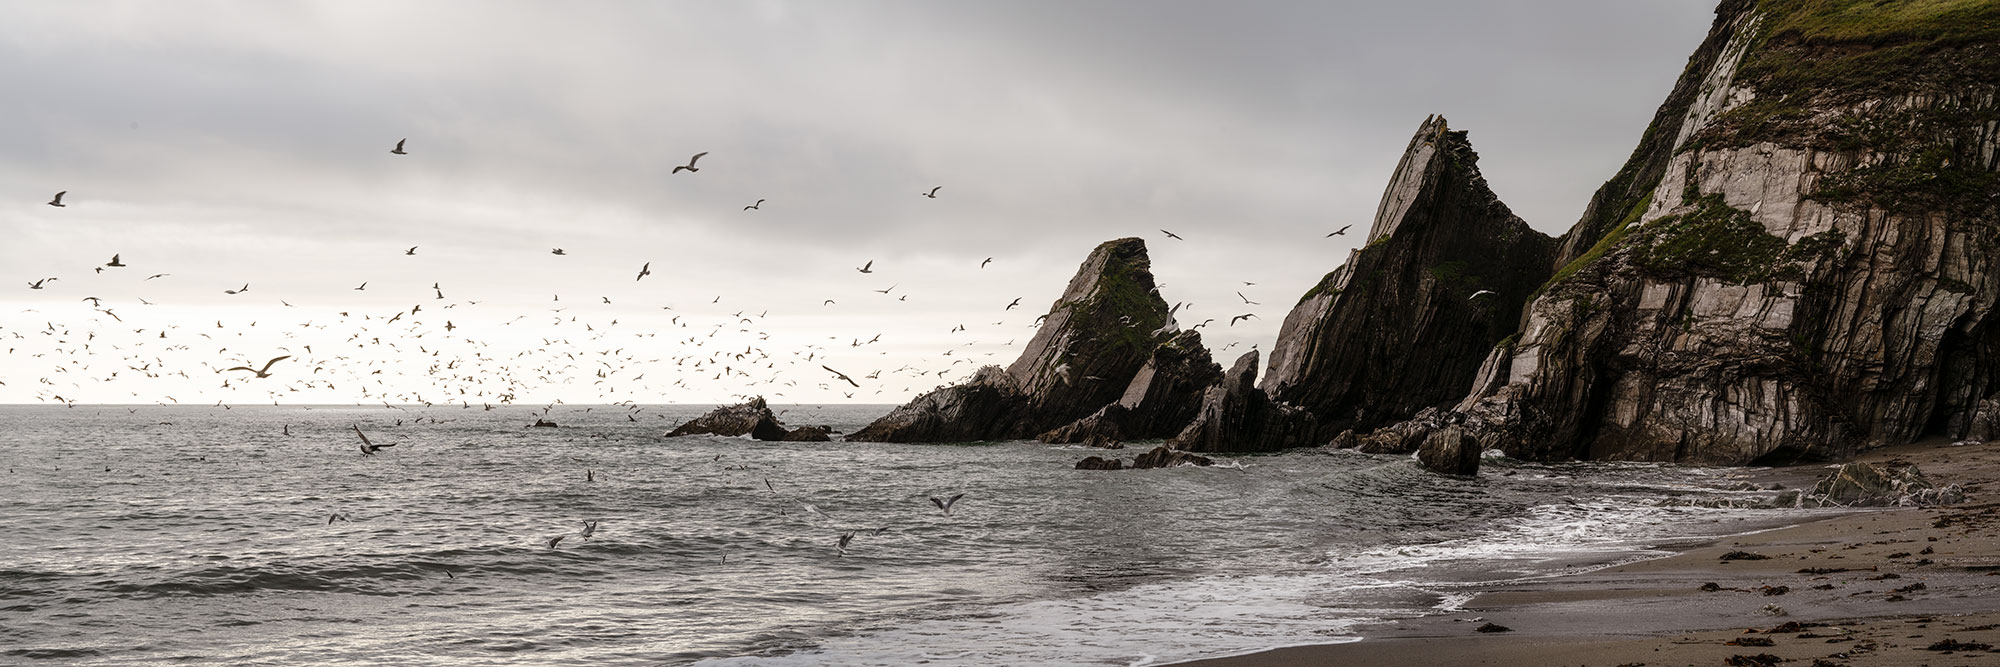 Panorama of birds in Westcombe bay beach in Devon